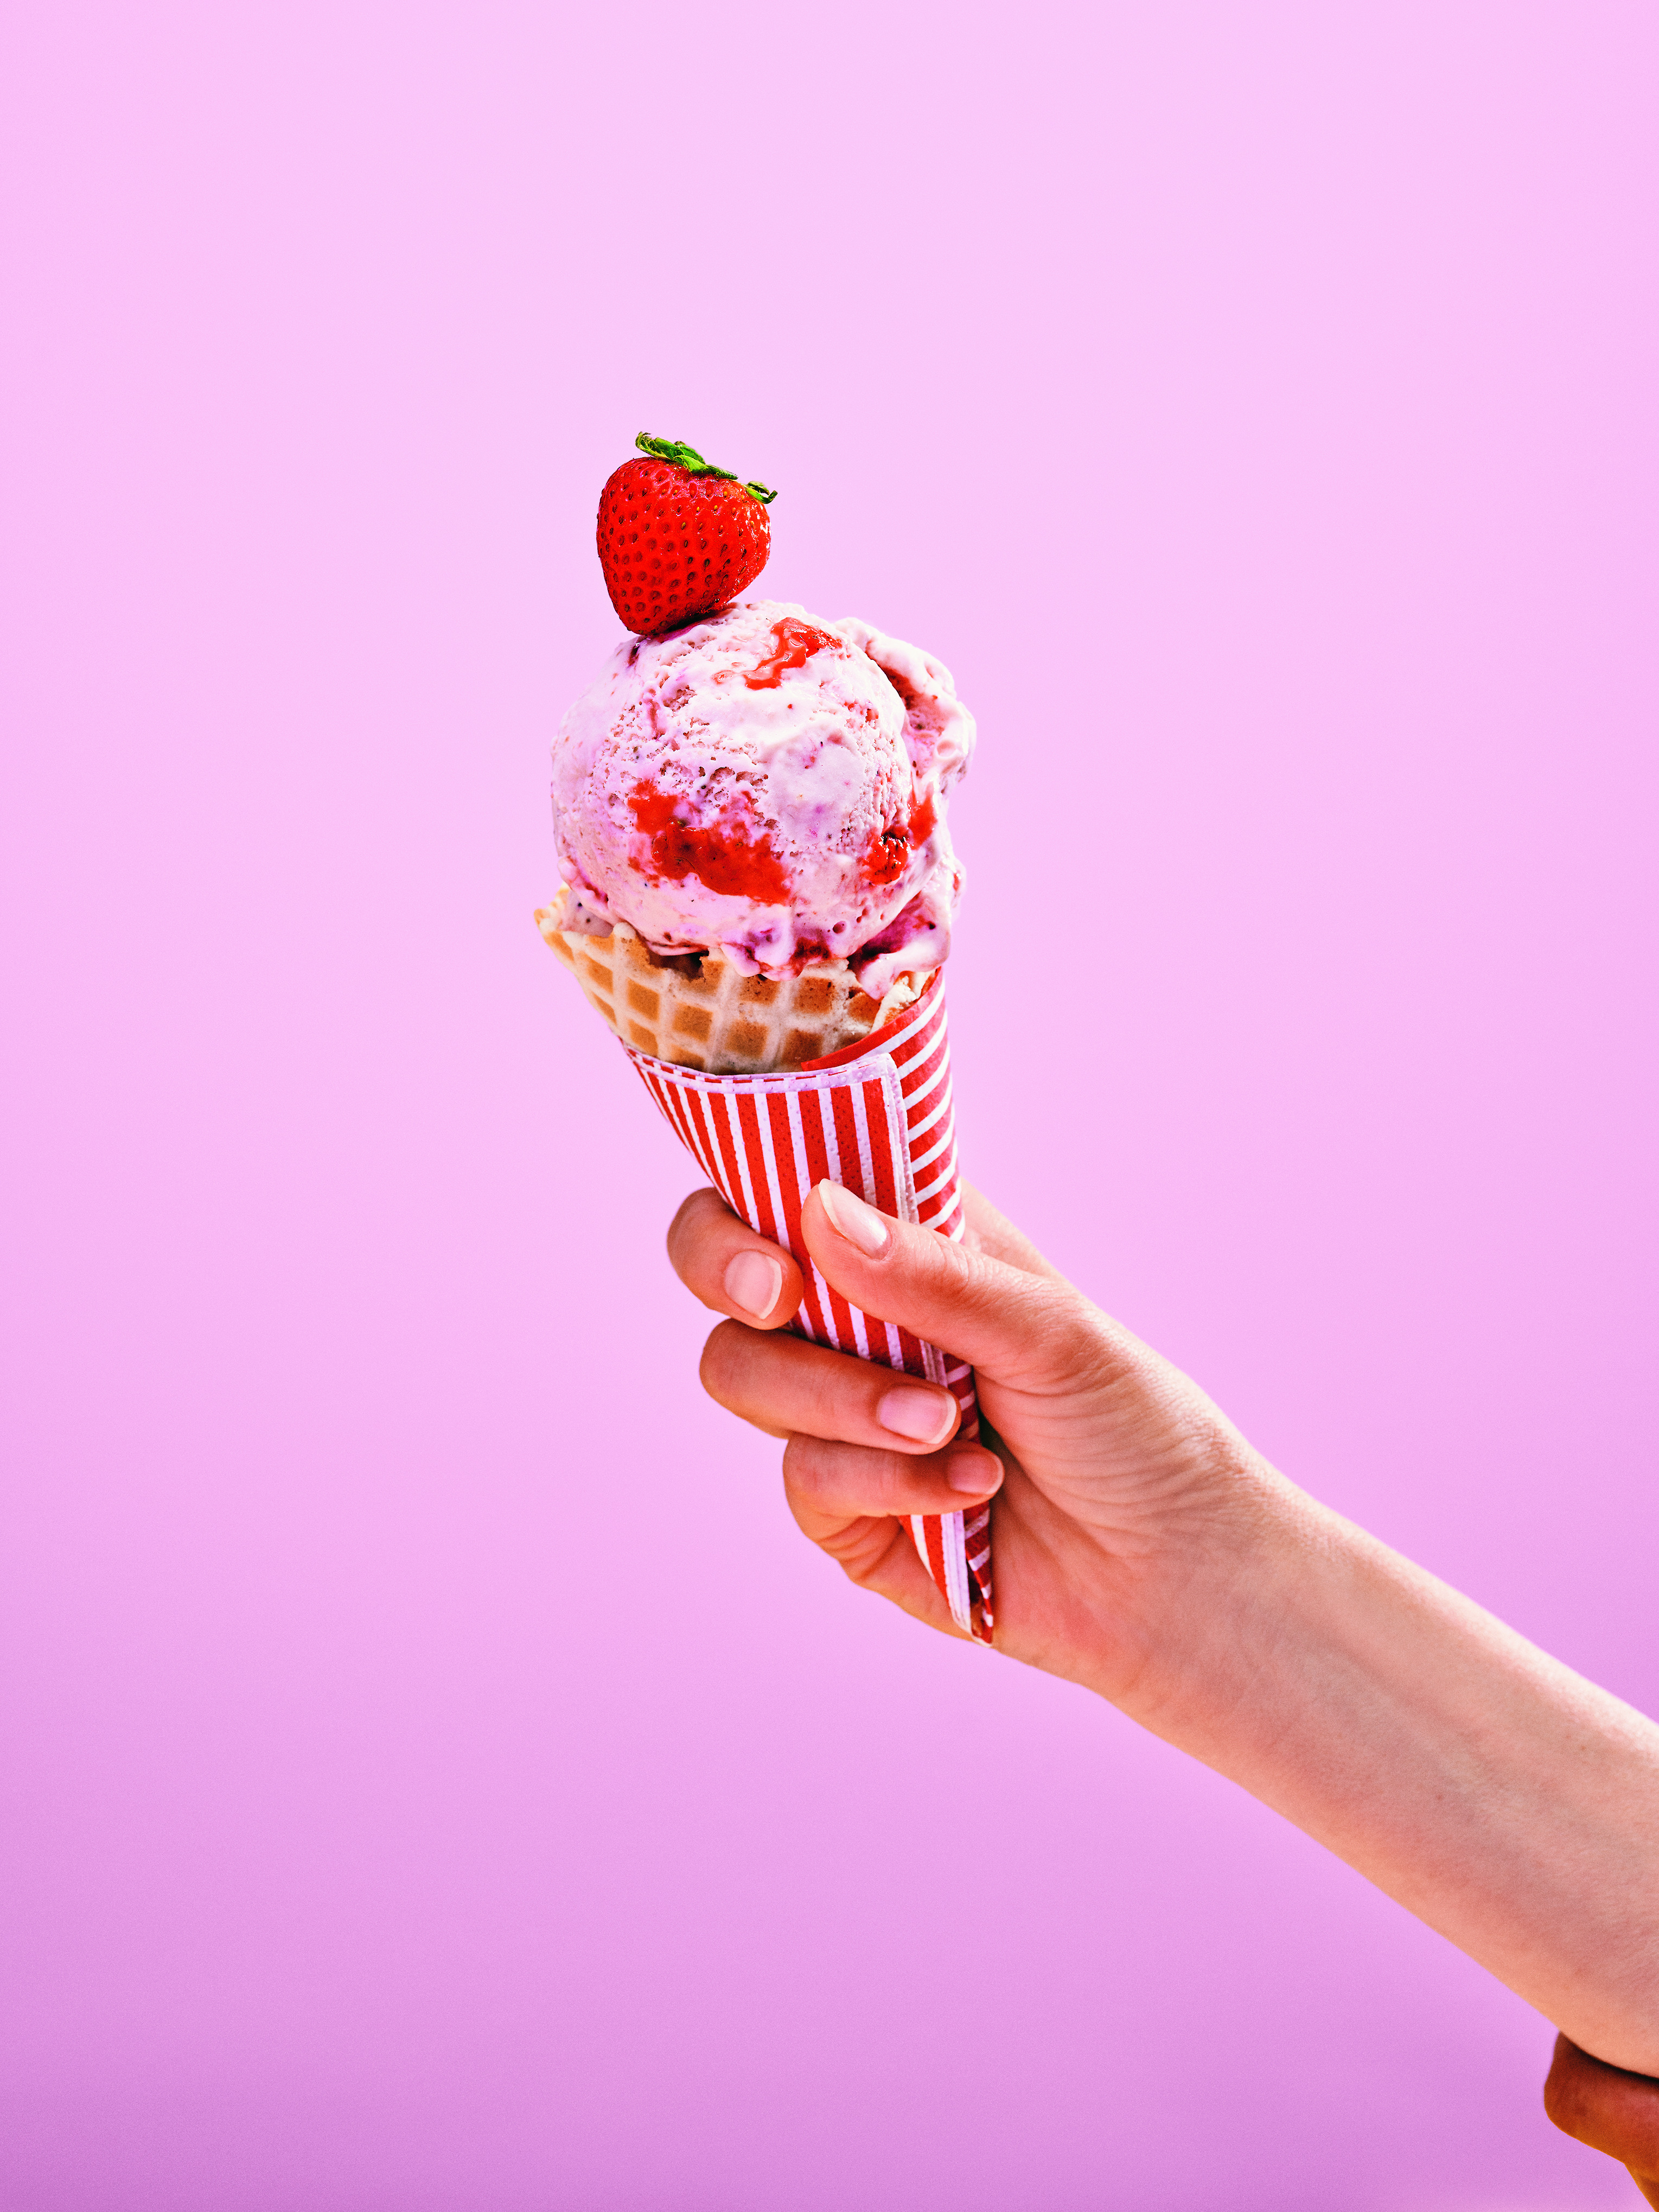 Strawberry Ripple Ice Cream Recipe!